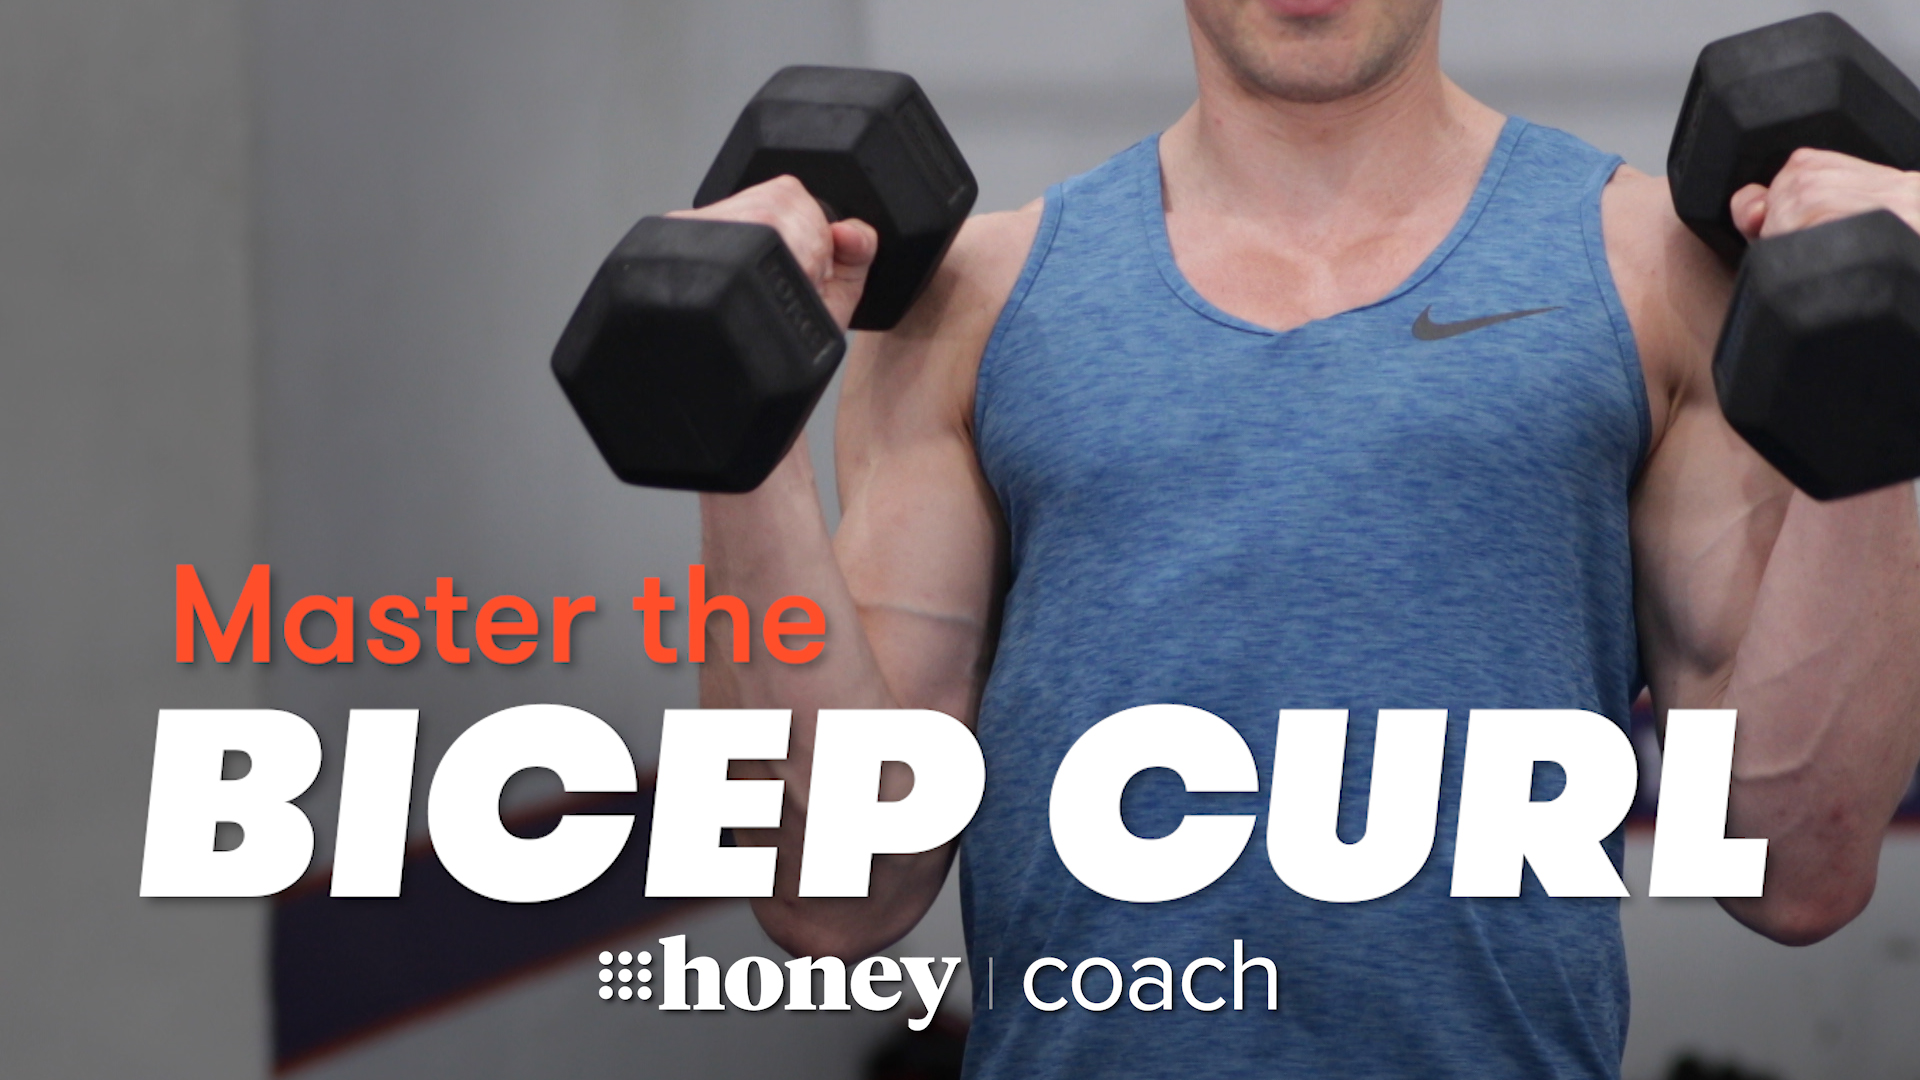 9Honey workout hacks: Bicep curl